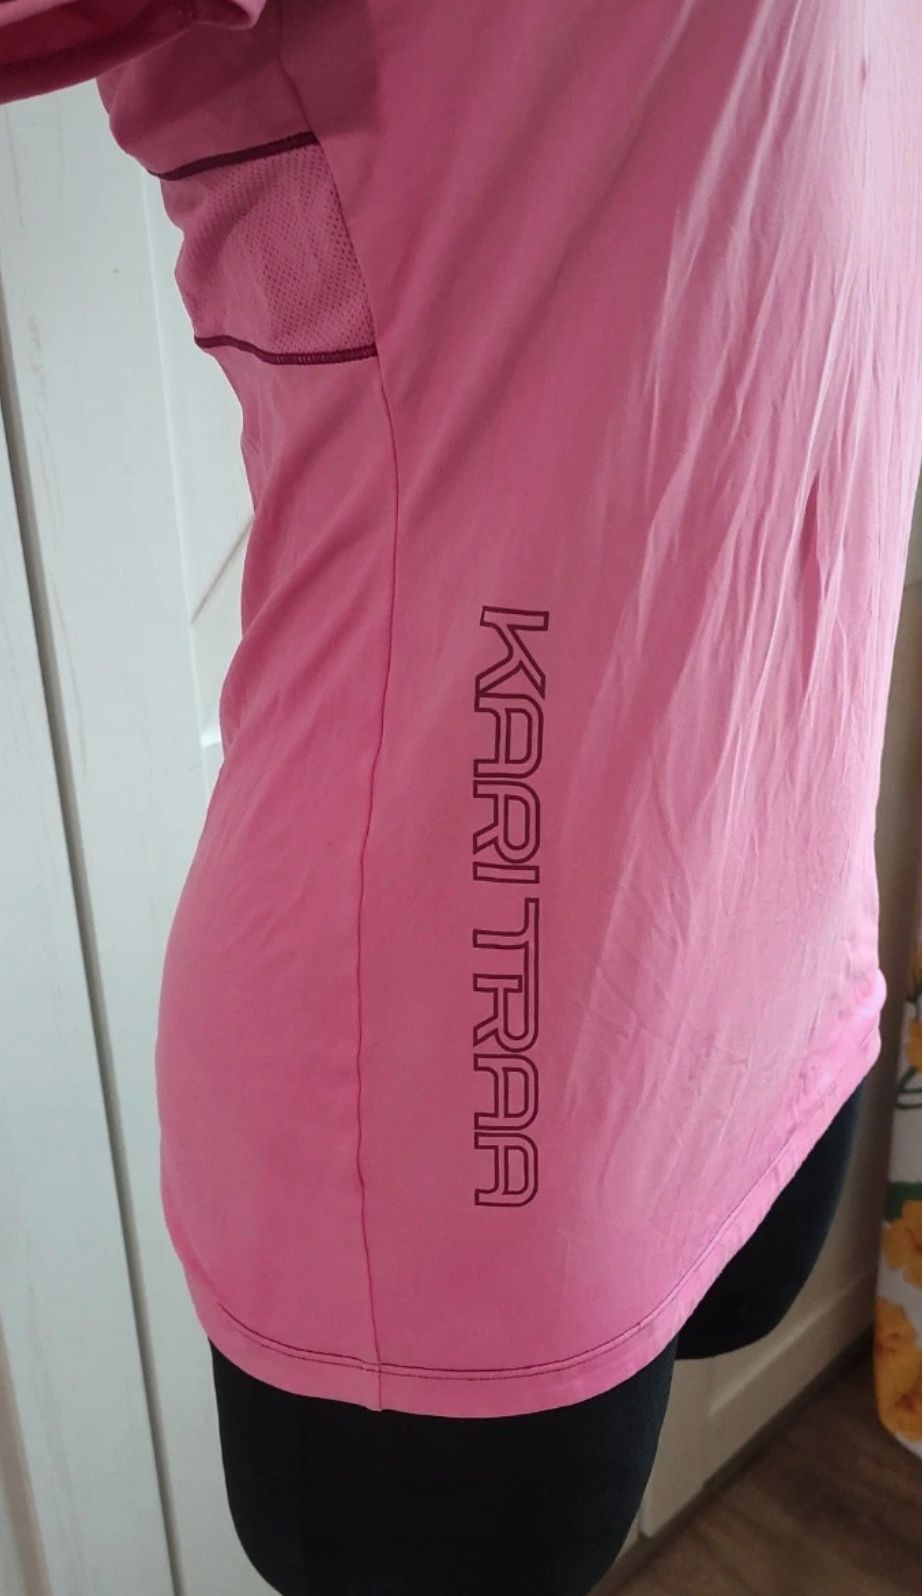 Koszulka sportowa różowa na siłownię Kari traa